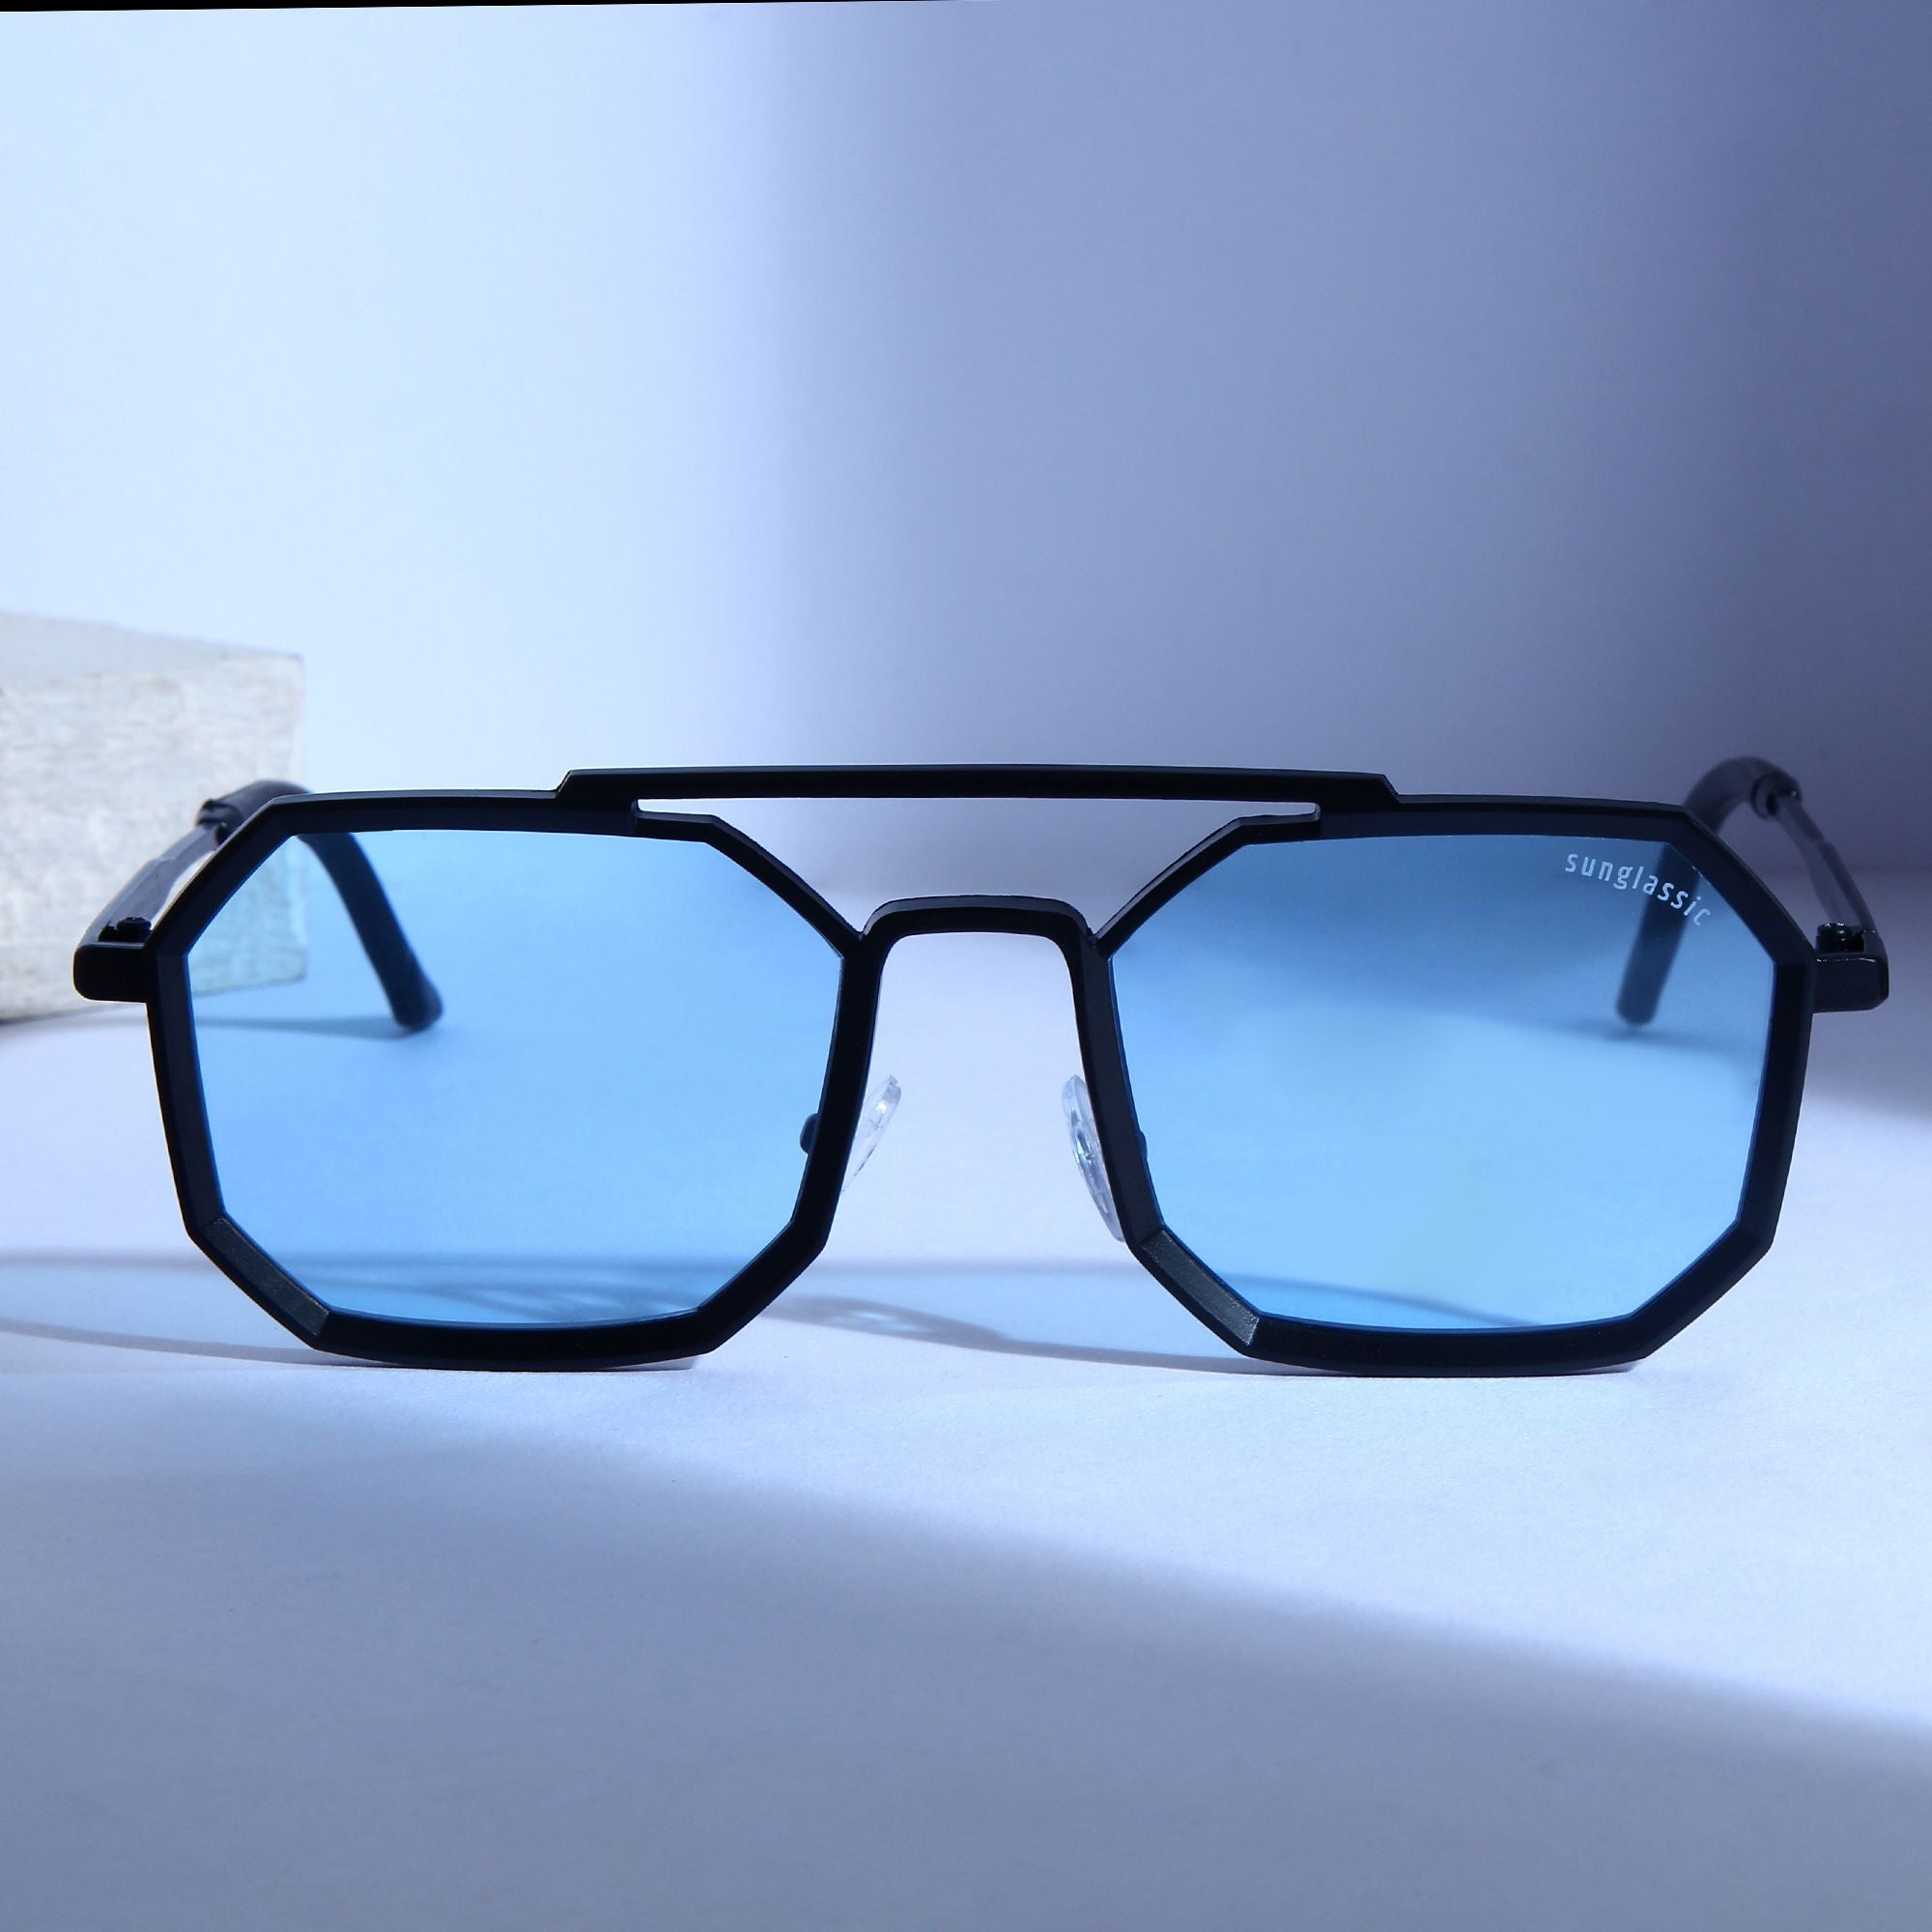 Commando Black Blue Edition Octagon Sunglasses by Sunglassic. UV400 protected sunglasses for men and women.